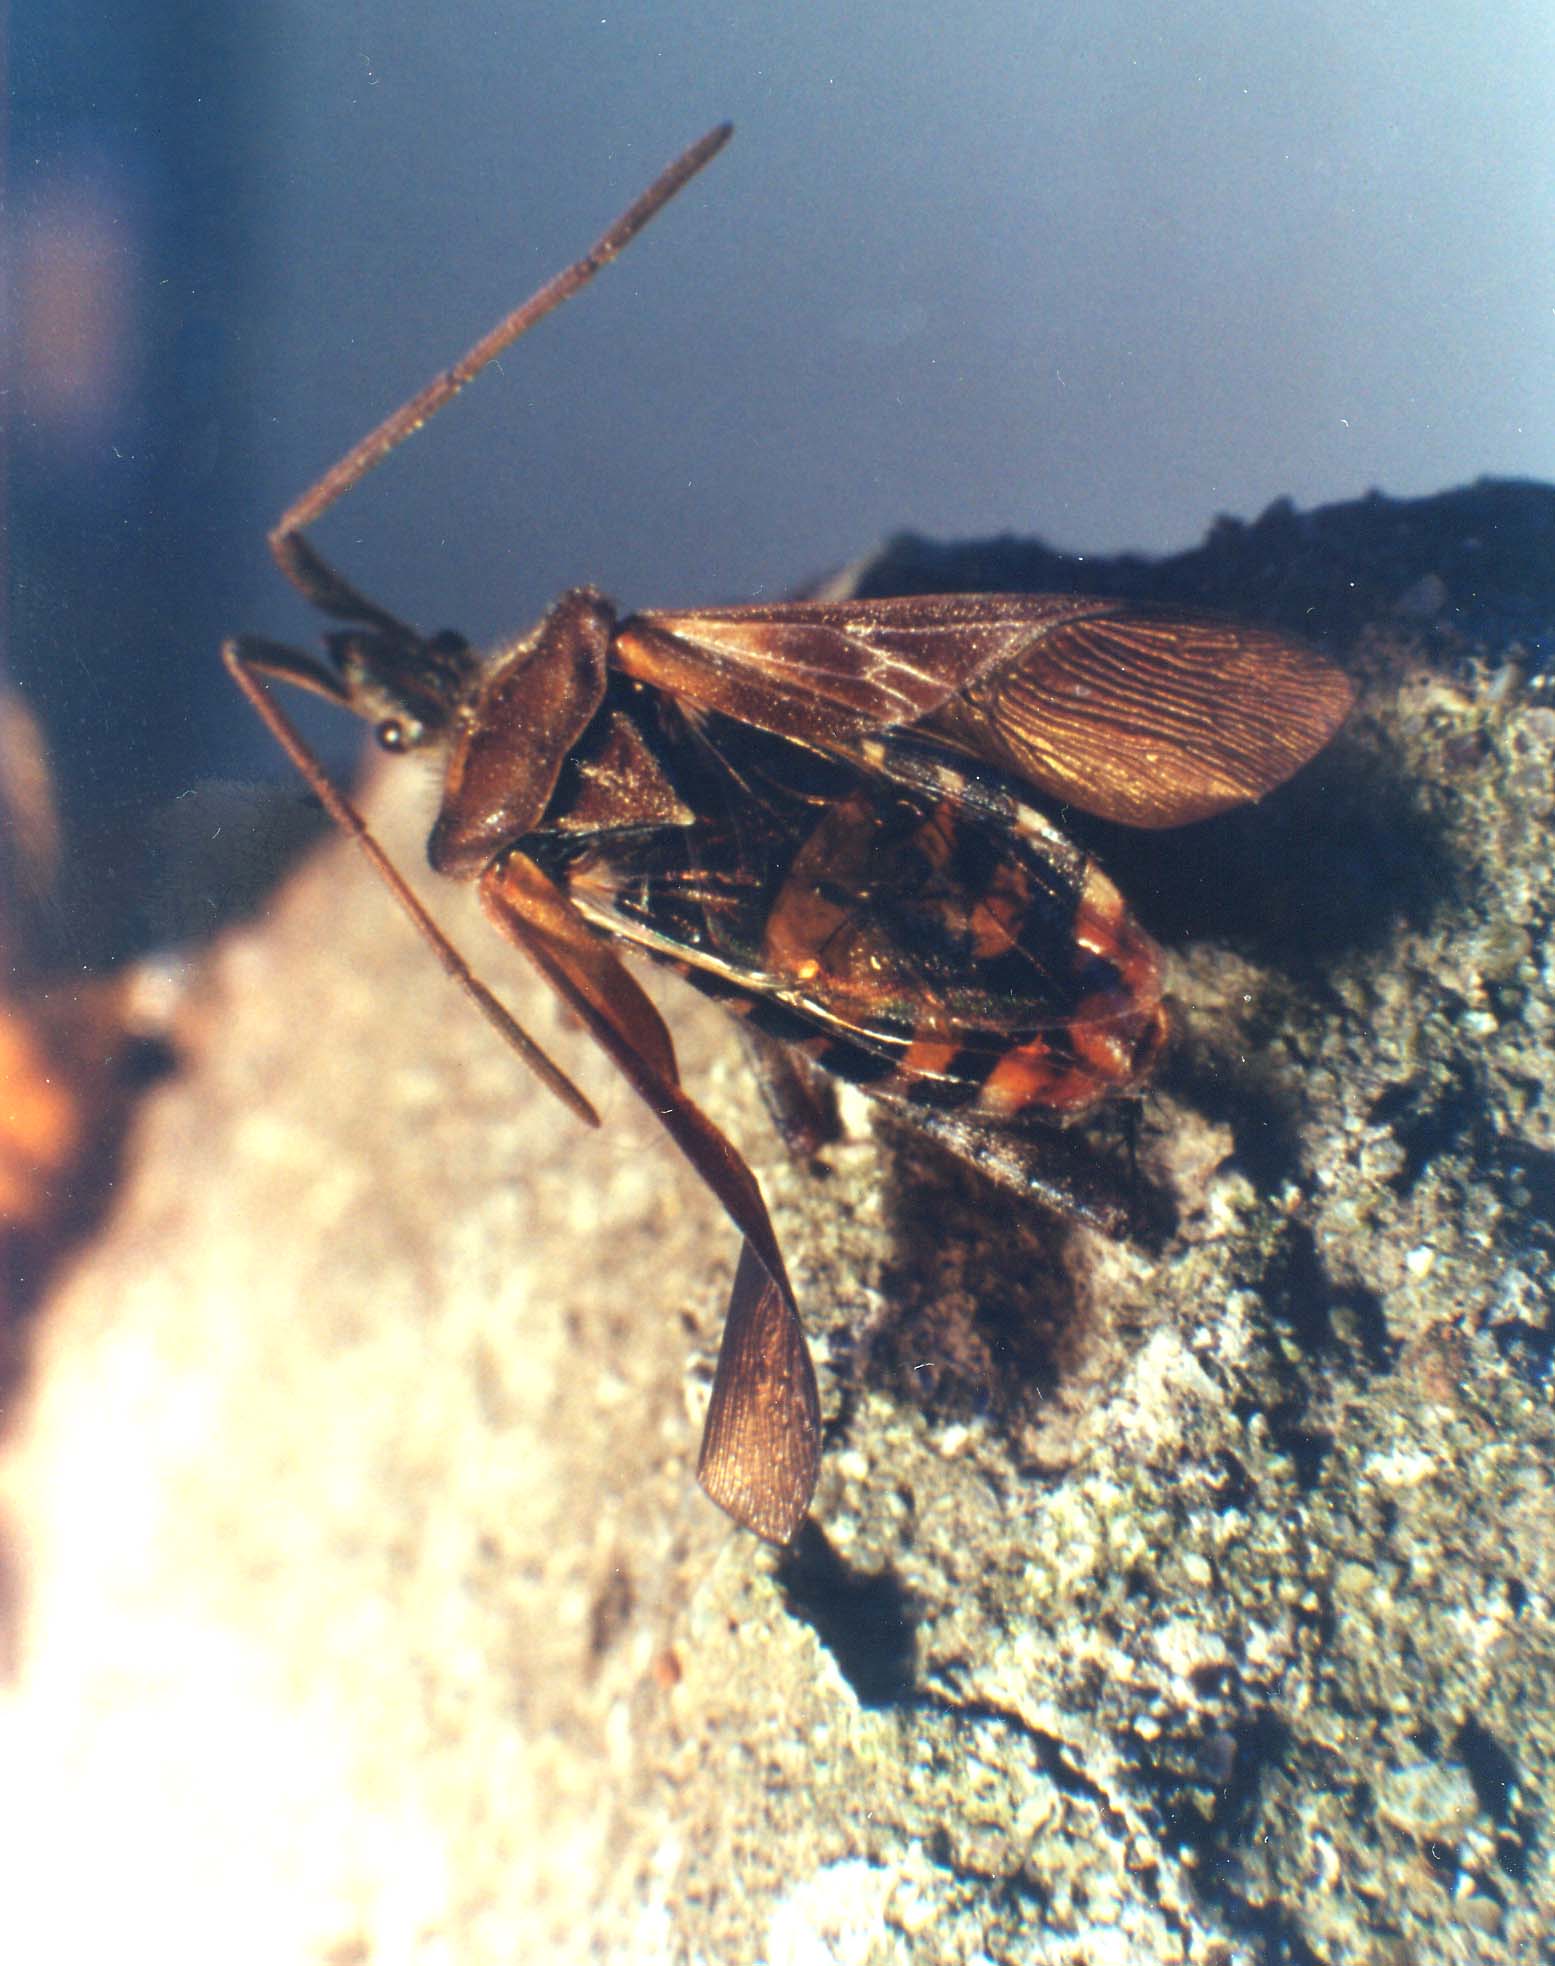 Leptoglossus occidentalis (Coreidae)